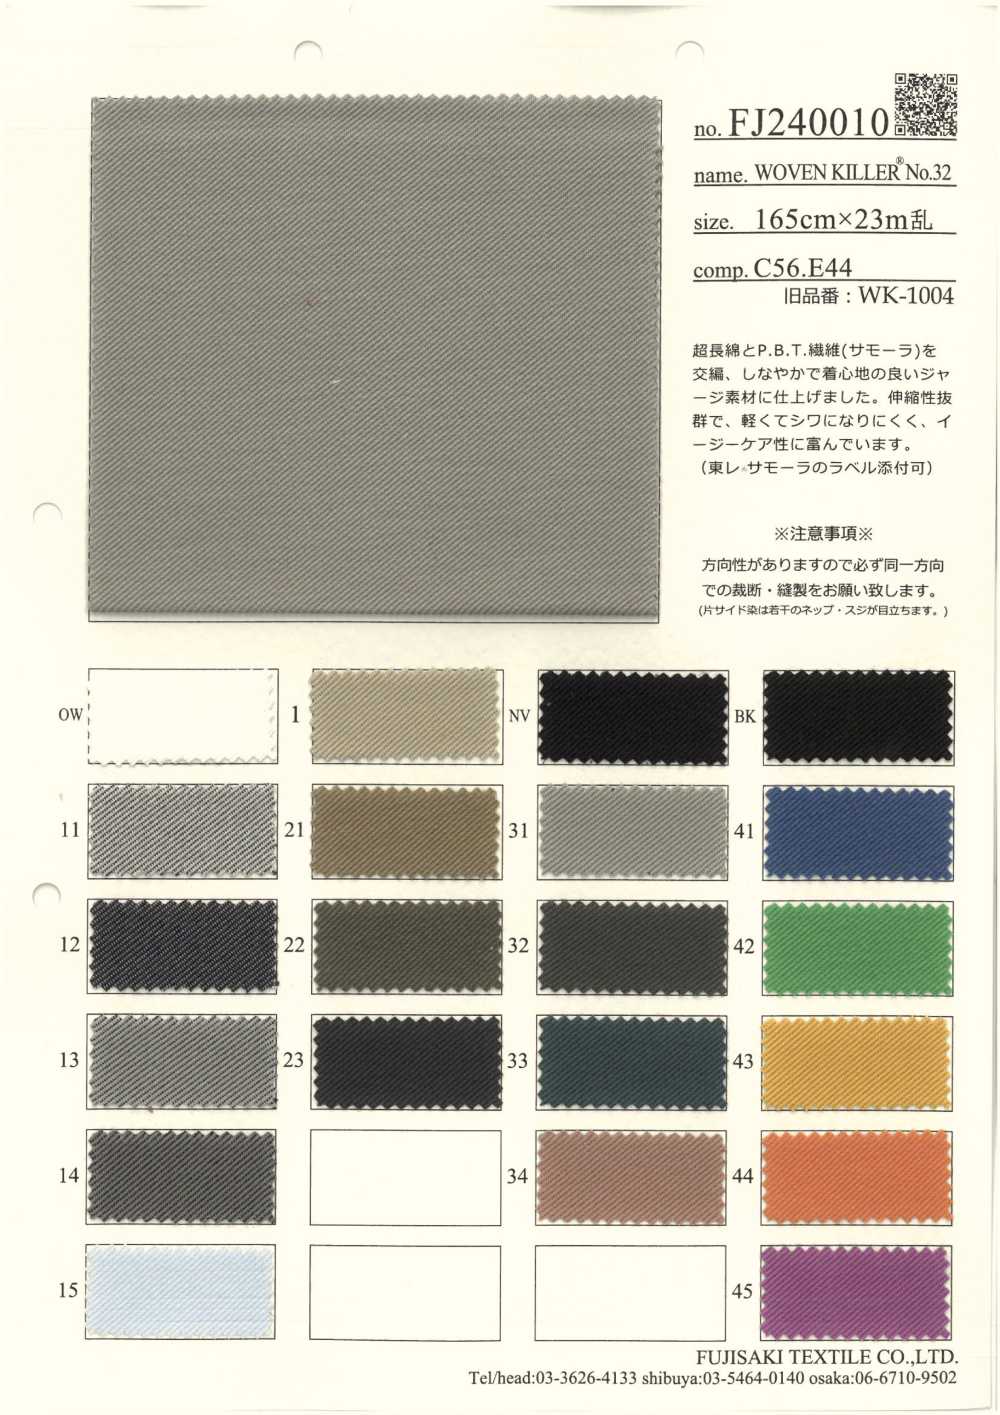 FJ240010 ASESINO DE TEJIDOS[Fabrica Textil] Fujisaki Textile